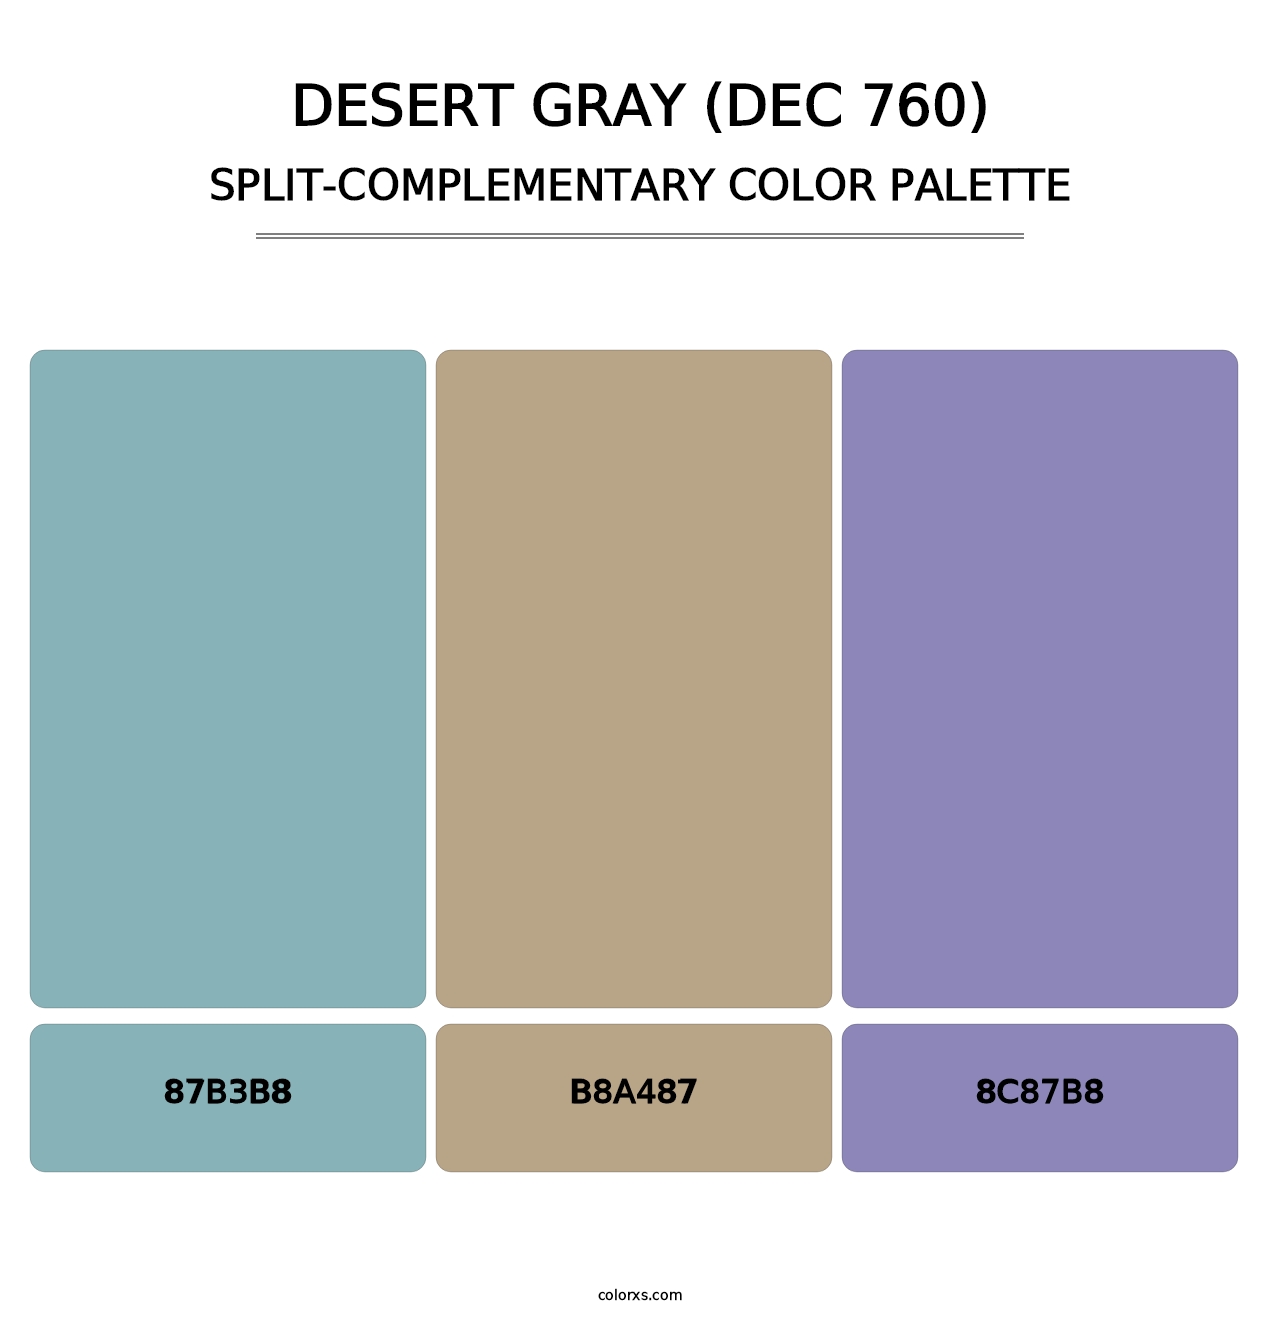 Desert Gray (DEC 760) - Split-Complementary Color Palette